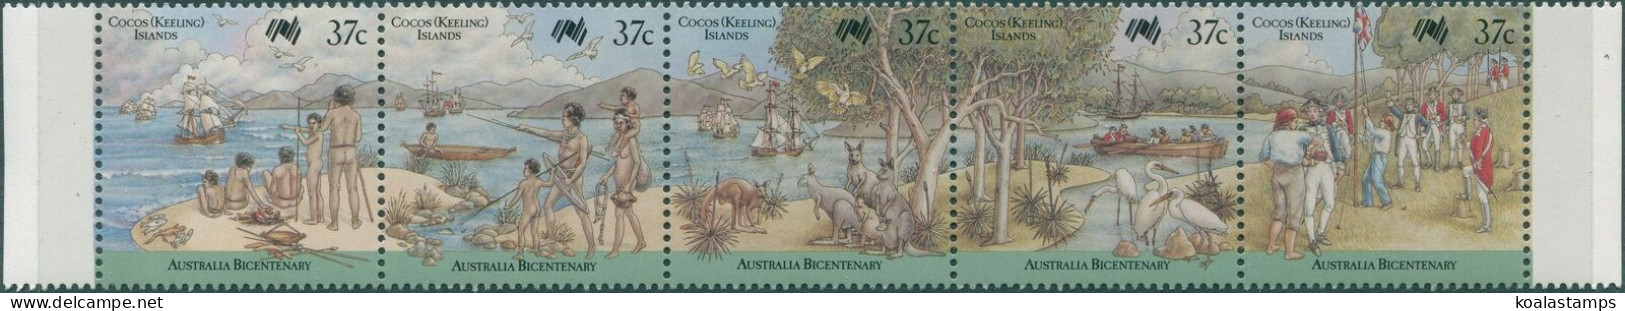 Cocos Islands 1988 SG175-179 Australia Bicentenary Set MNH - Cocoseilanden